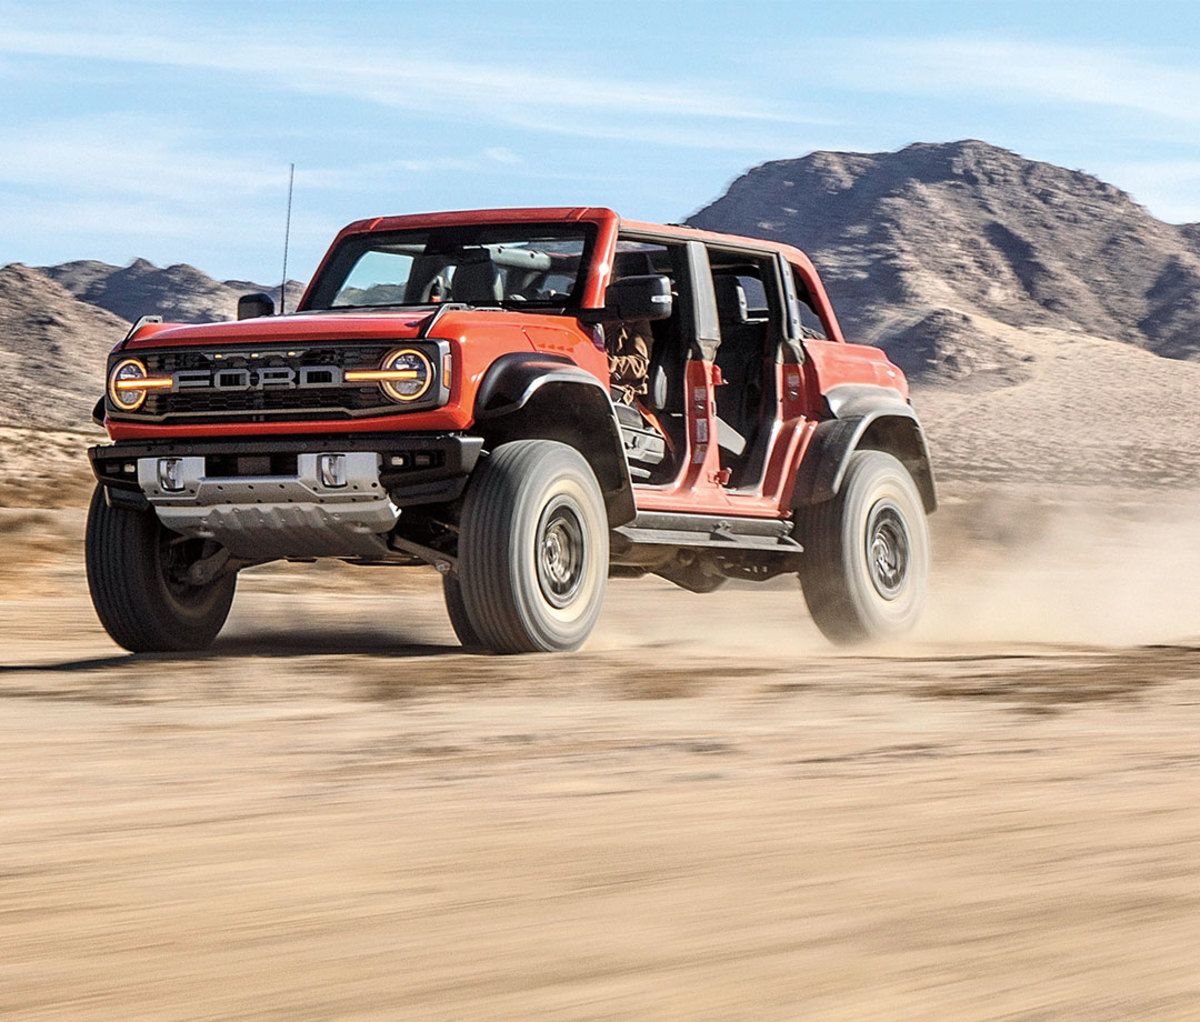 Orange Ford Bronco 4x4 speeding over dusty desert